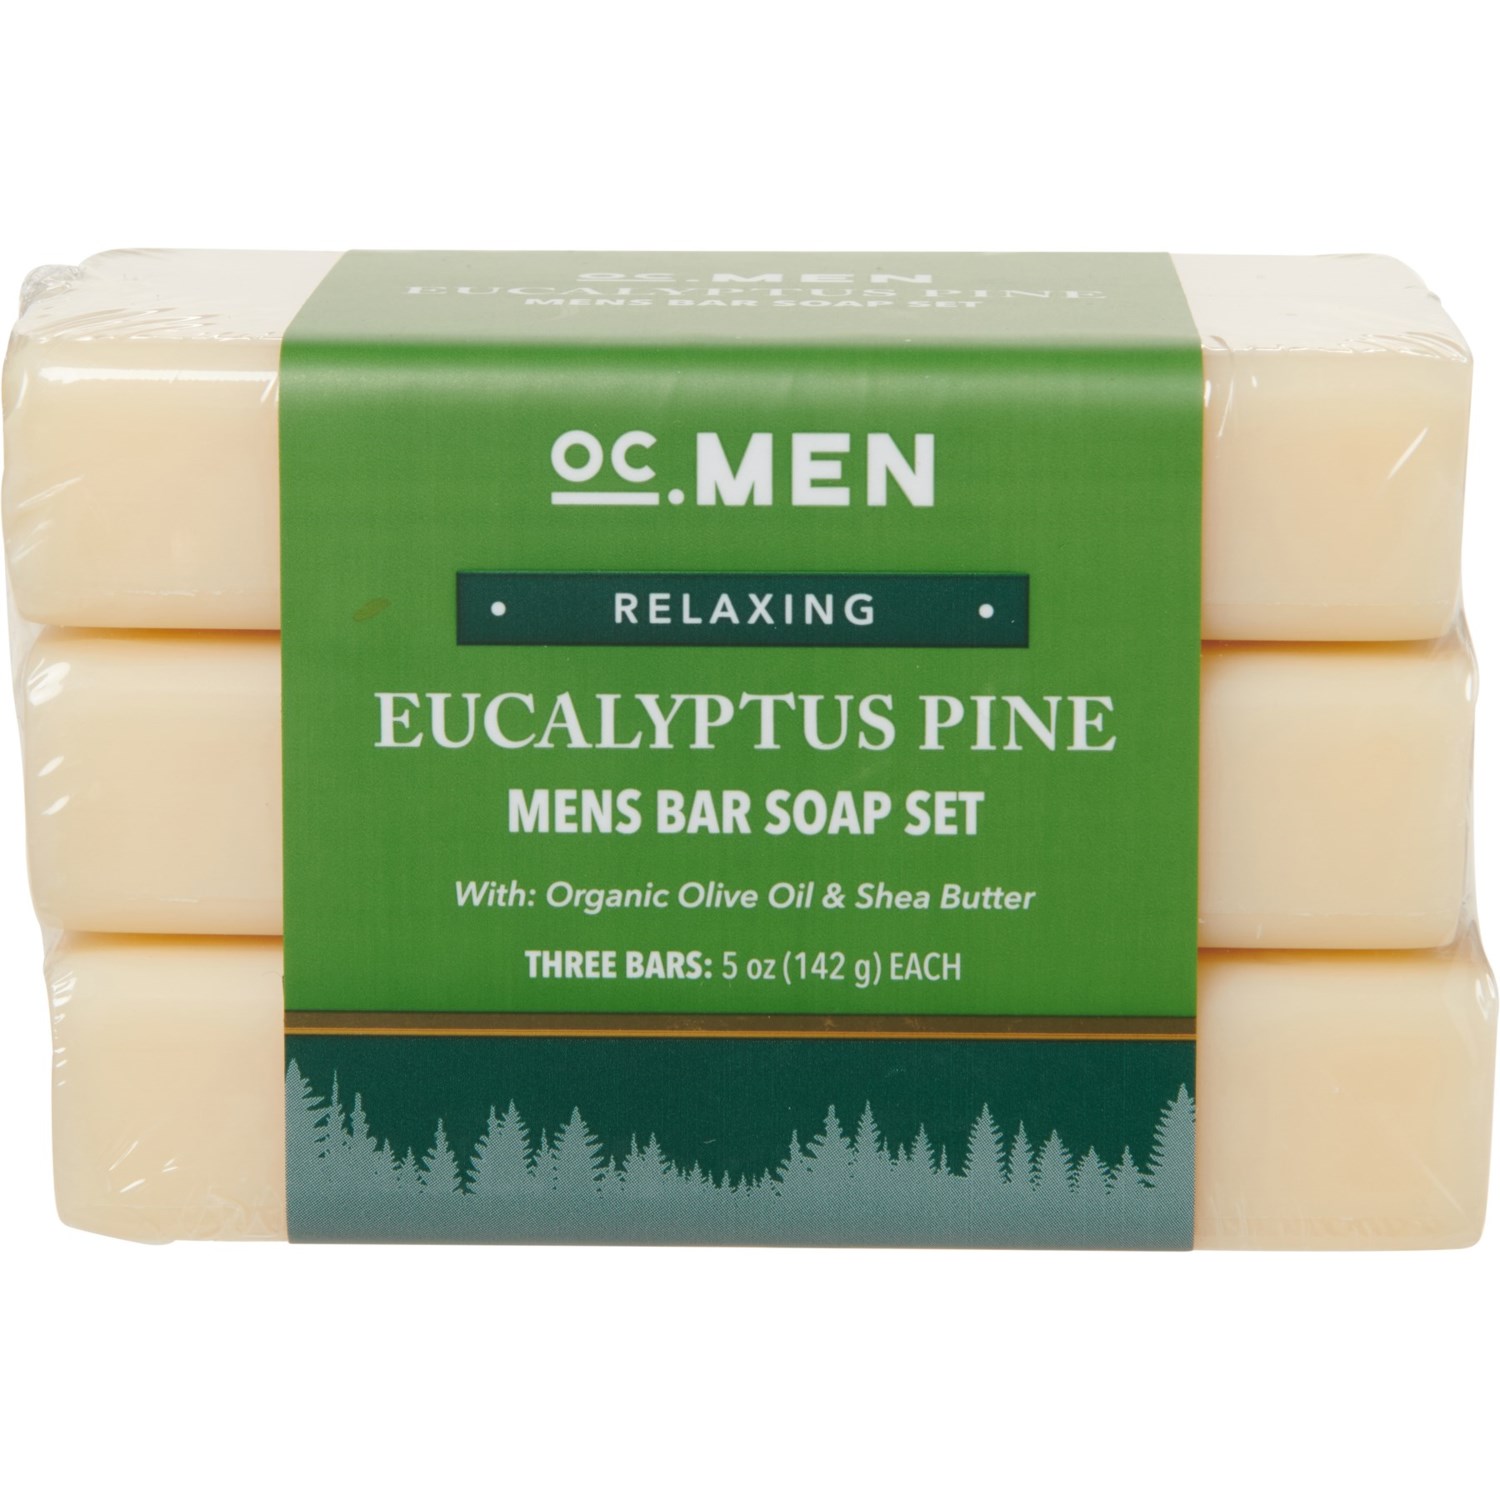 OC Men Eucalyptus Pine Relaxing Bar Soaps - Set of 3 - Save 33%